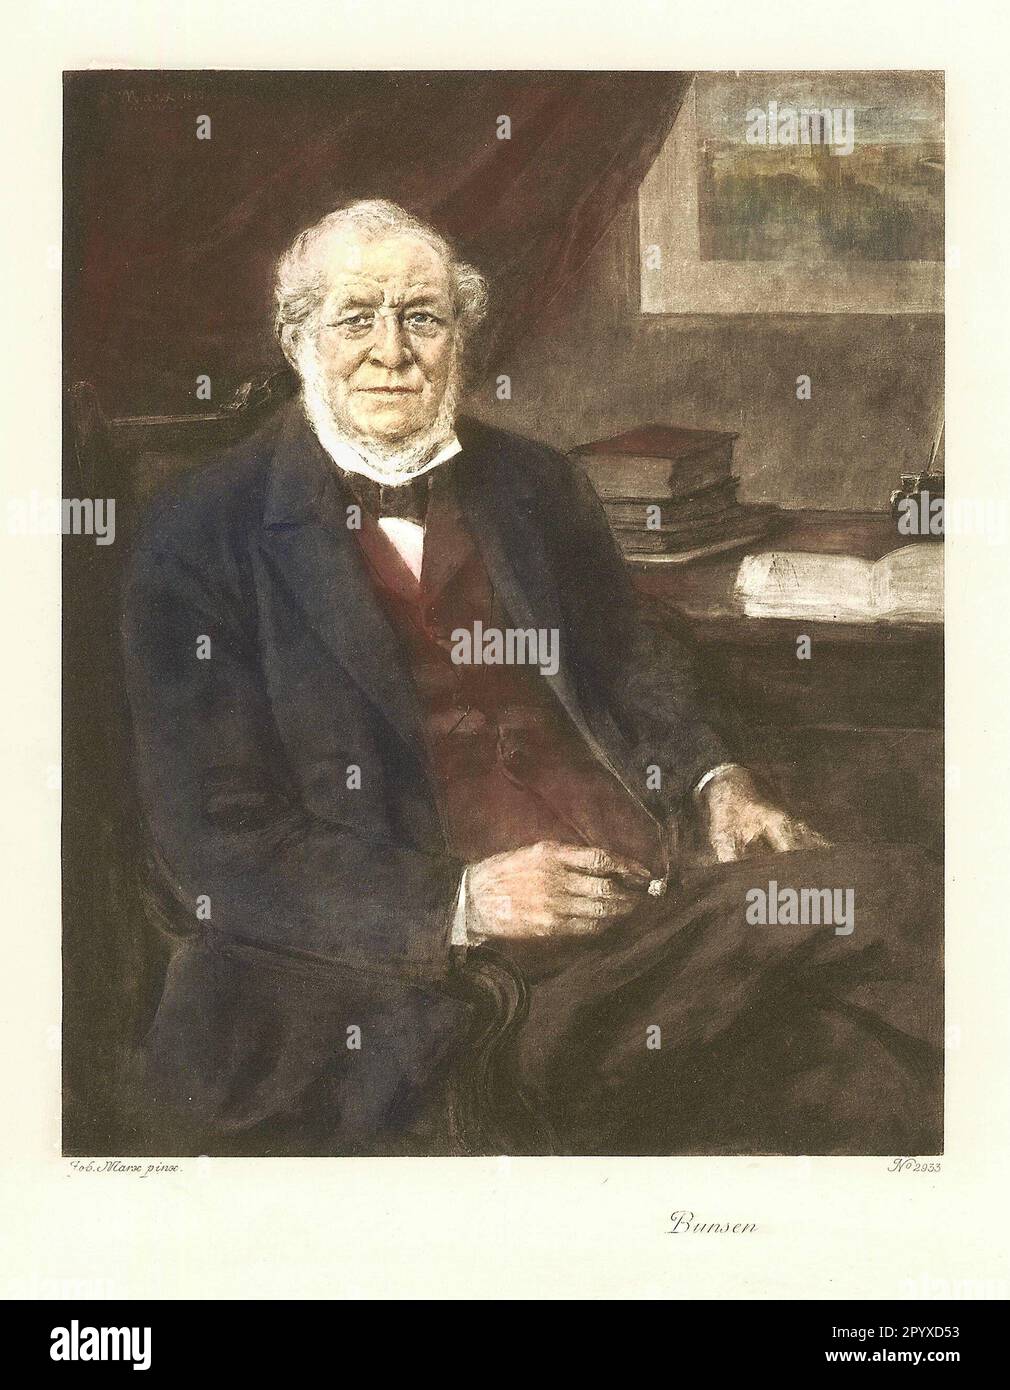 Robert Wilhelm Bunsen (1811-1899), German chemist, inventor of the Bunsen burner. Painting by Tobias Marx. Photo: Heliogravure, Corpus Imaginum, Hanfstaengl Collection. [automated translation] Stock Photo